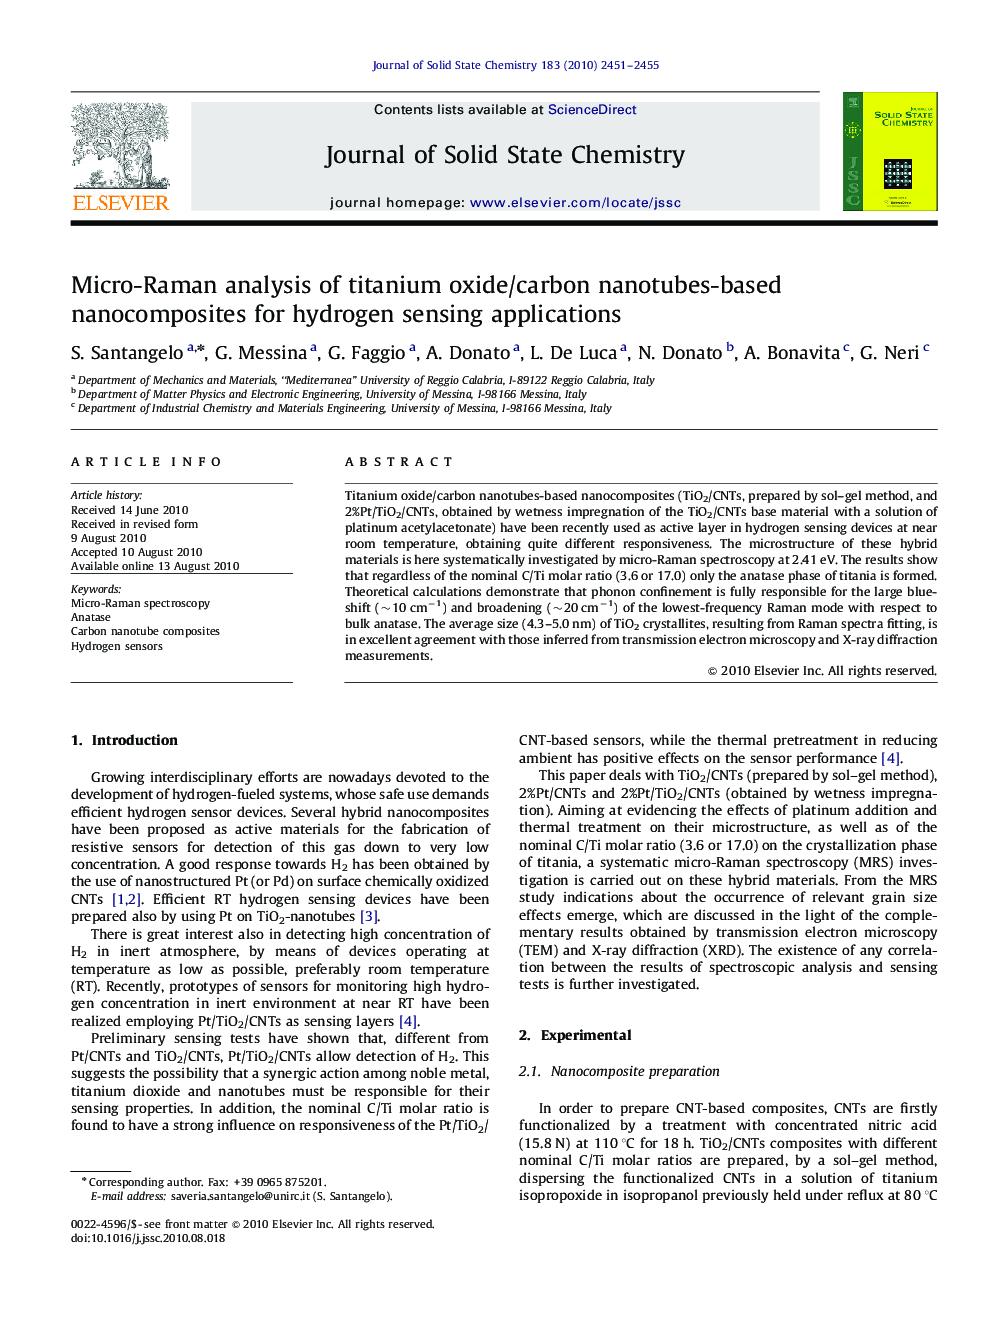 Micro-Raman analysis of titanium oxide/carbon nanotubes-based nanocomposites for hydrogen sensing applications